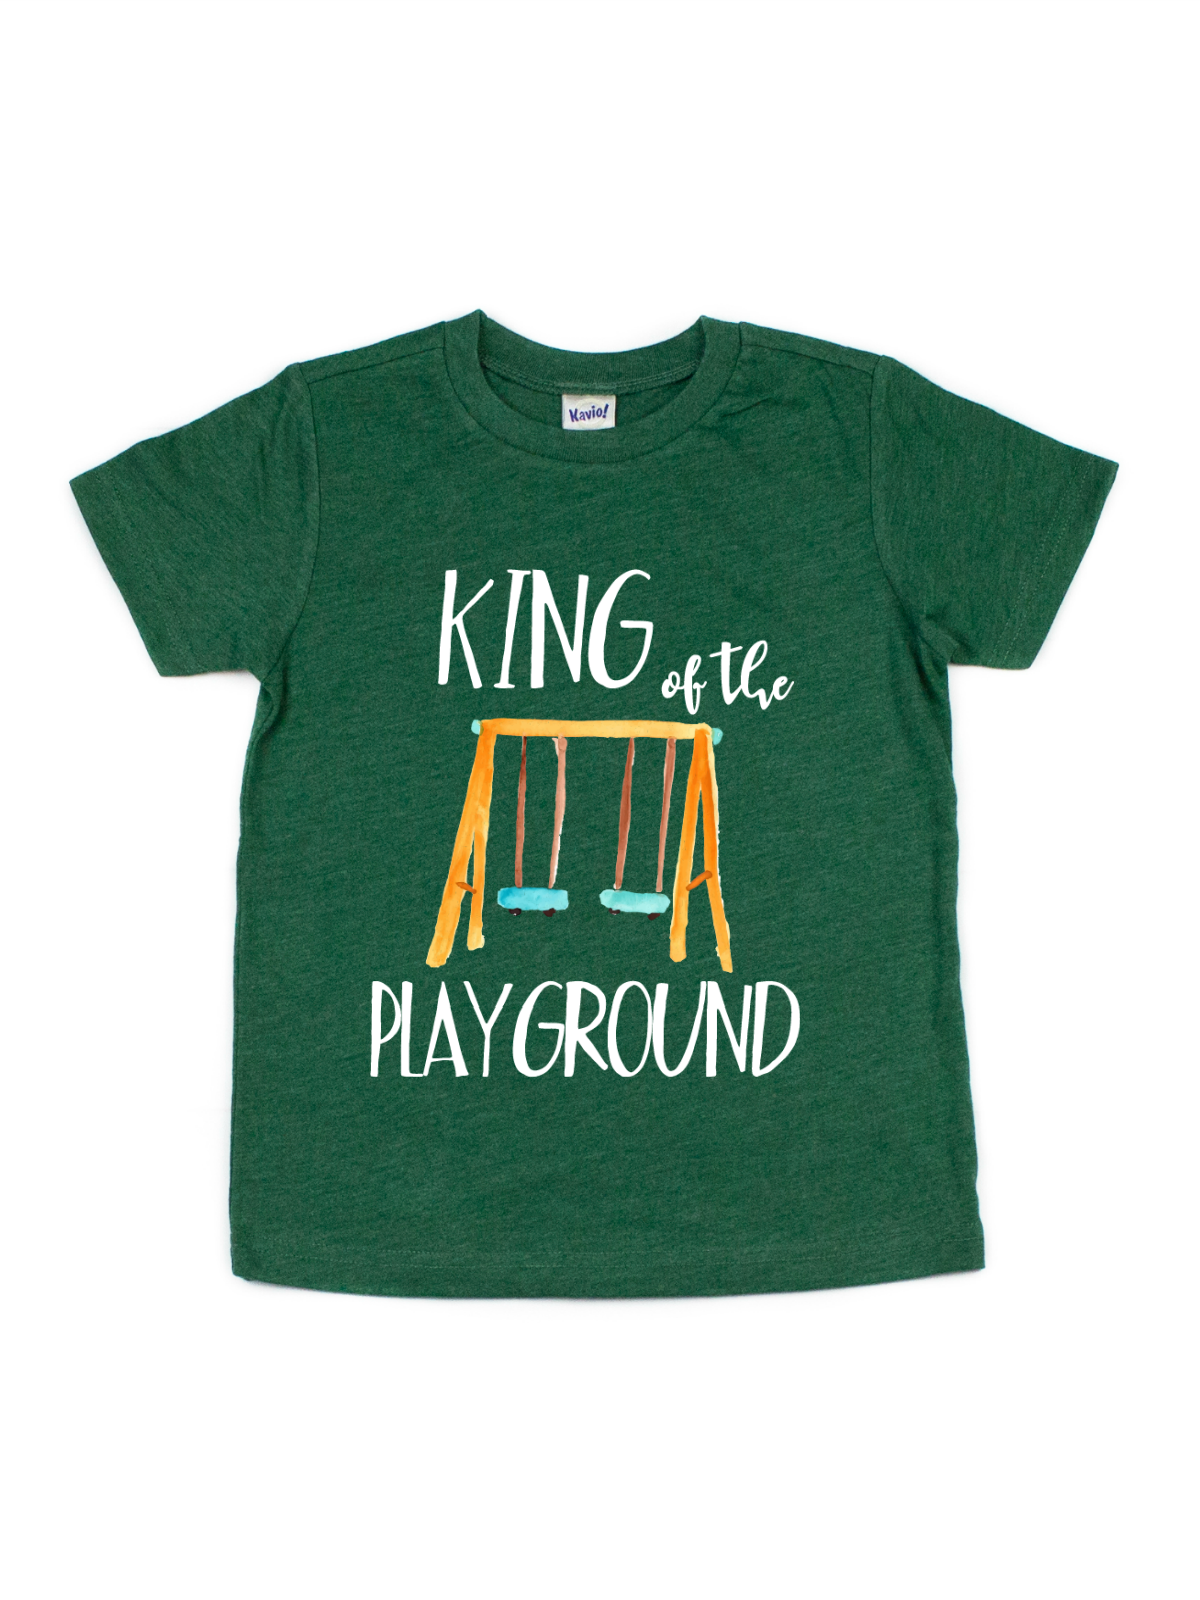 king of the playground kids hunter green tee